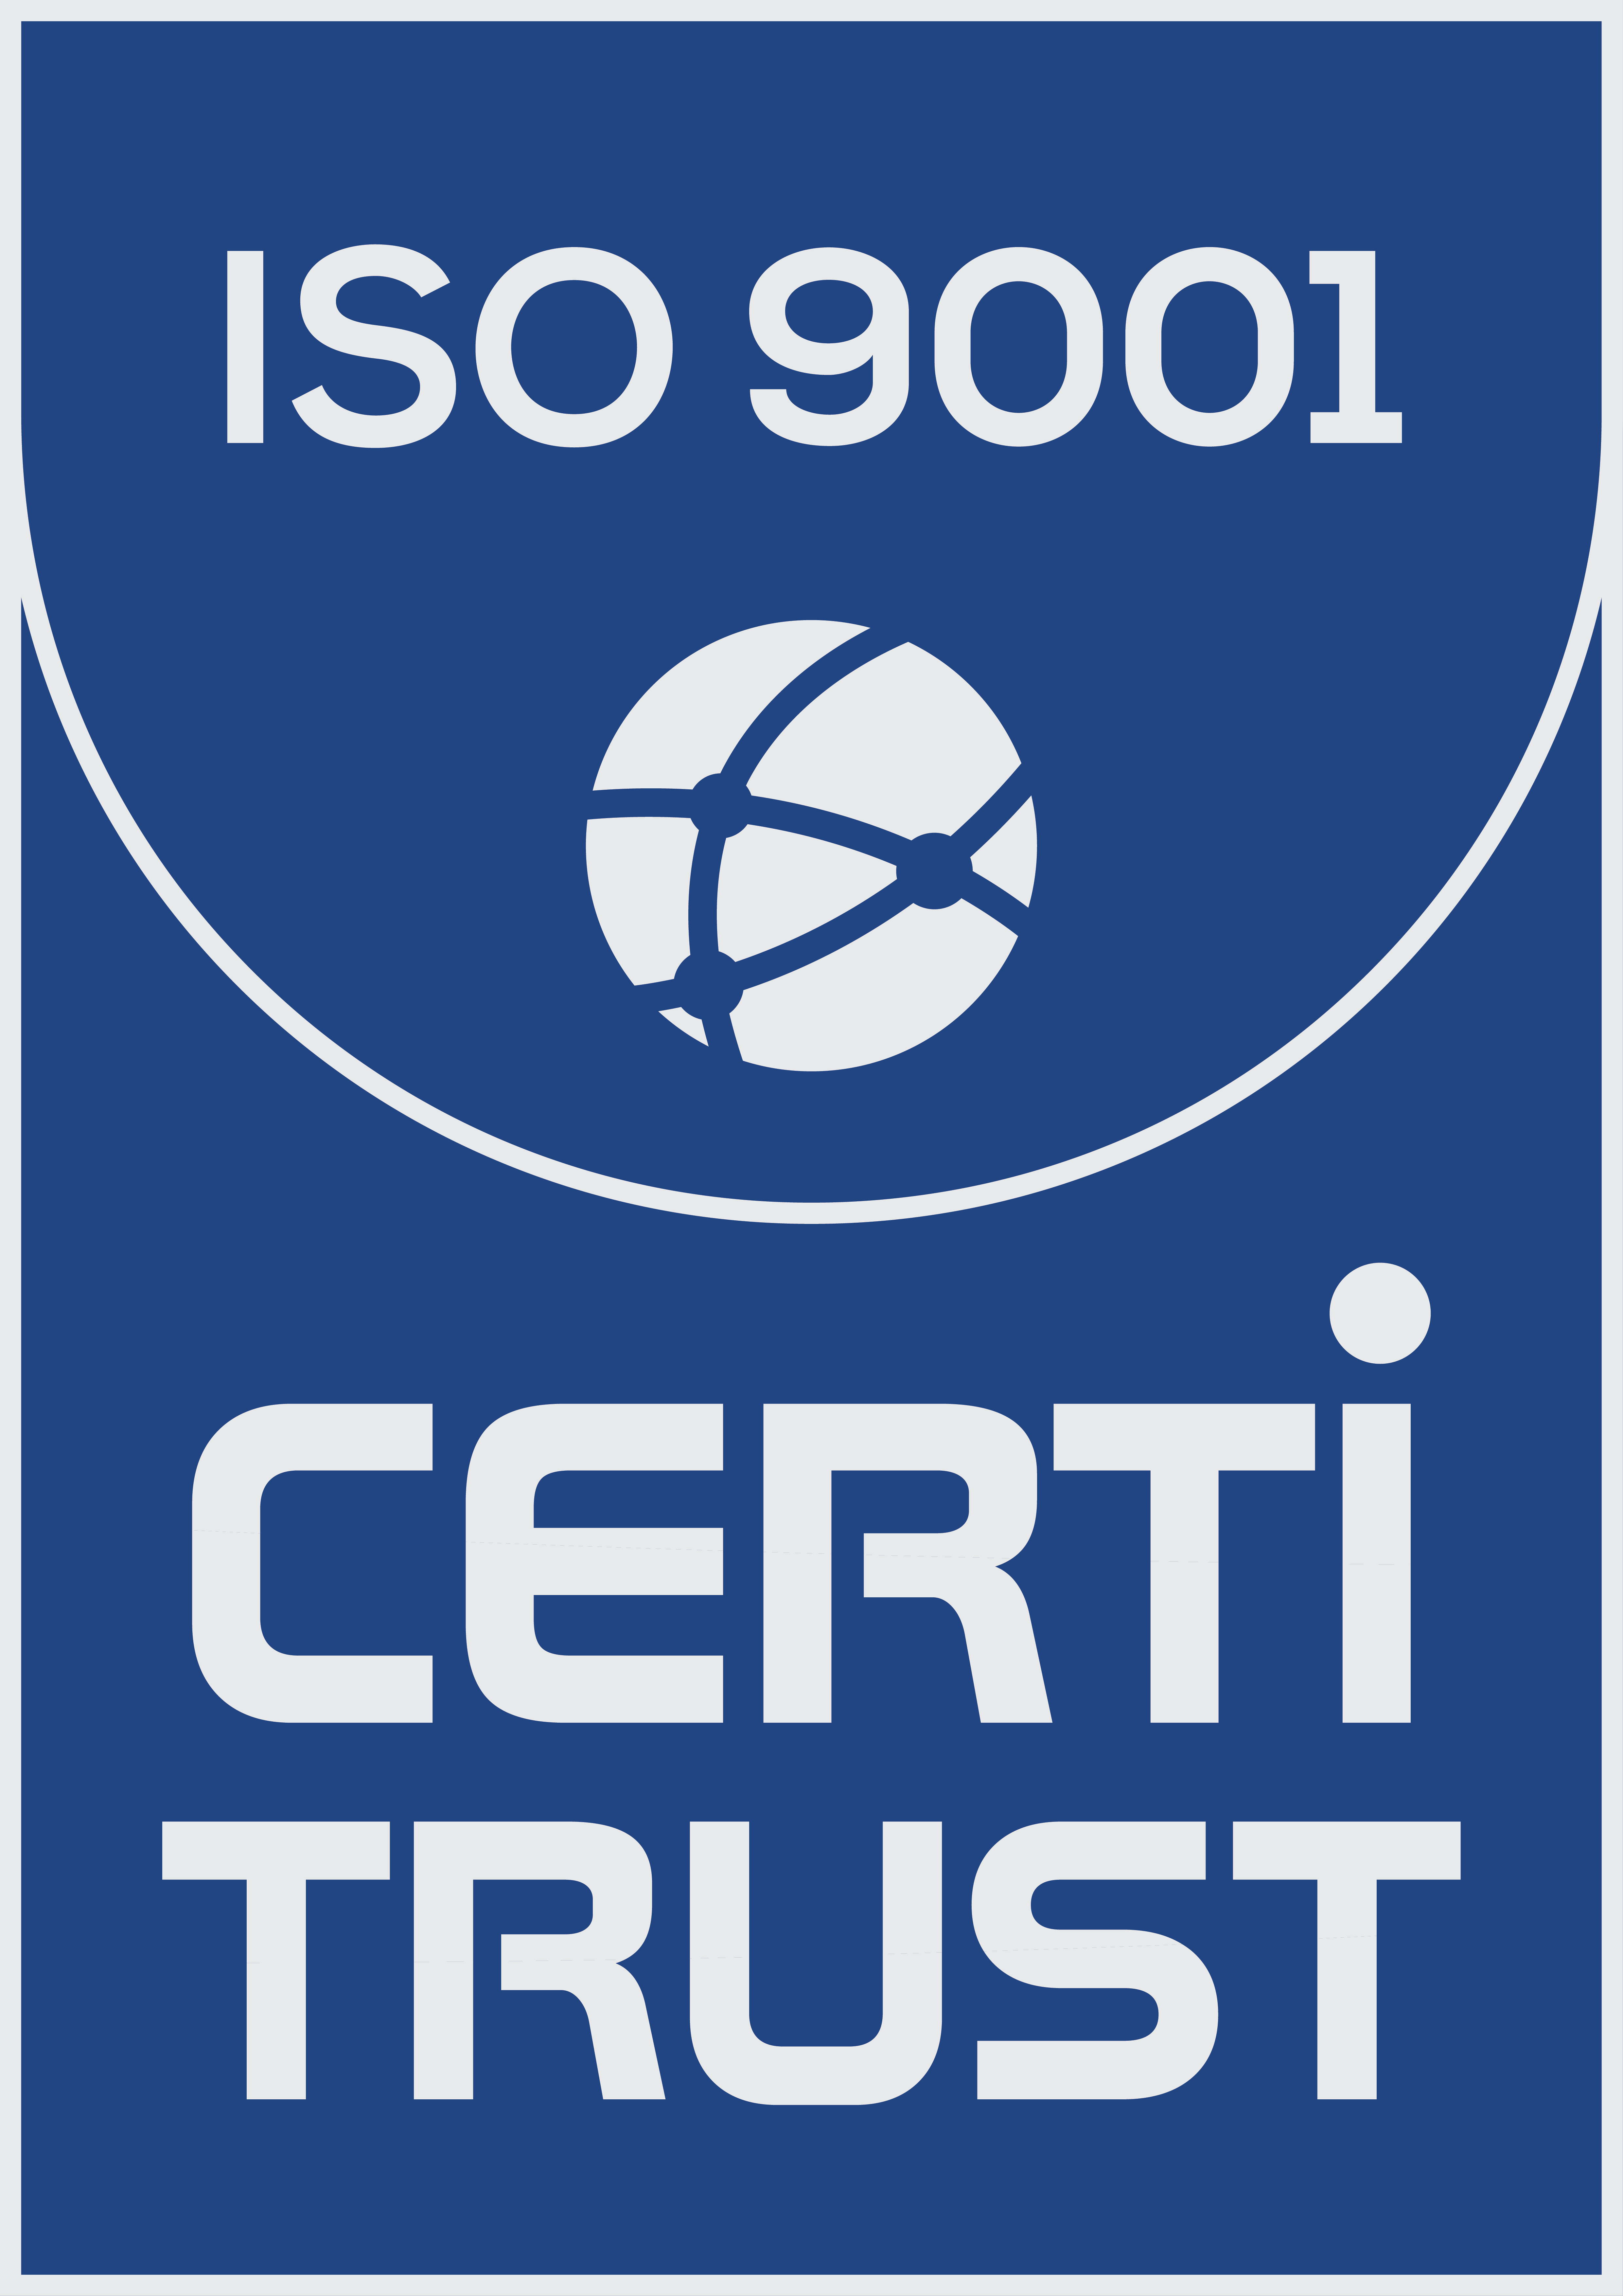 Certification ISO-9001 CertiTrust